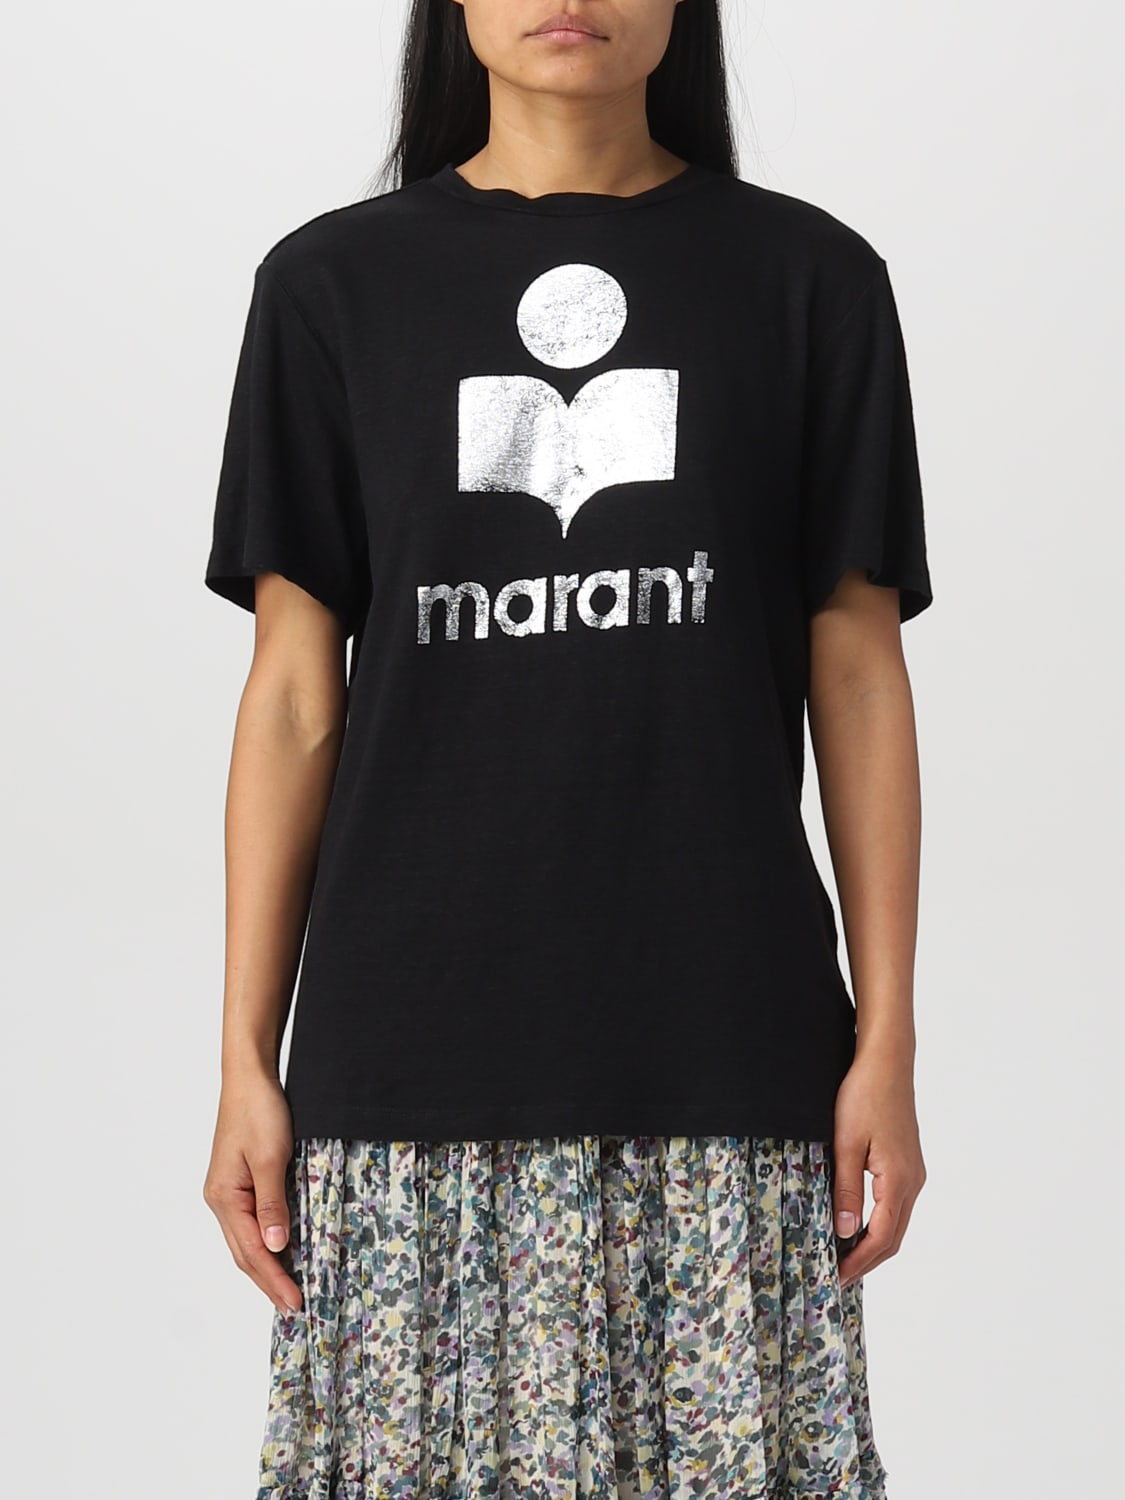 ISABEL MARANT ETOILE: t-shirt for woman - Isabel Marant Etoile shirt TS0001FAA1N10E online on